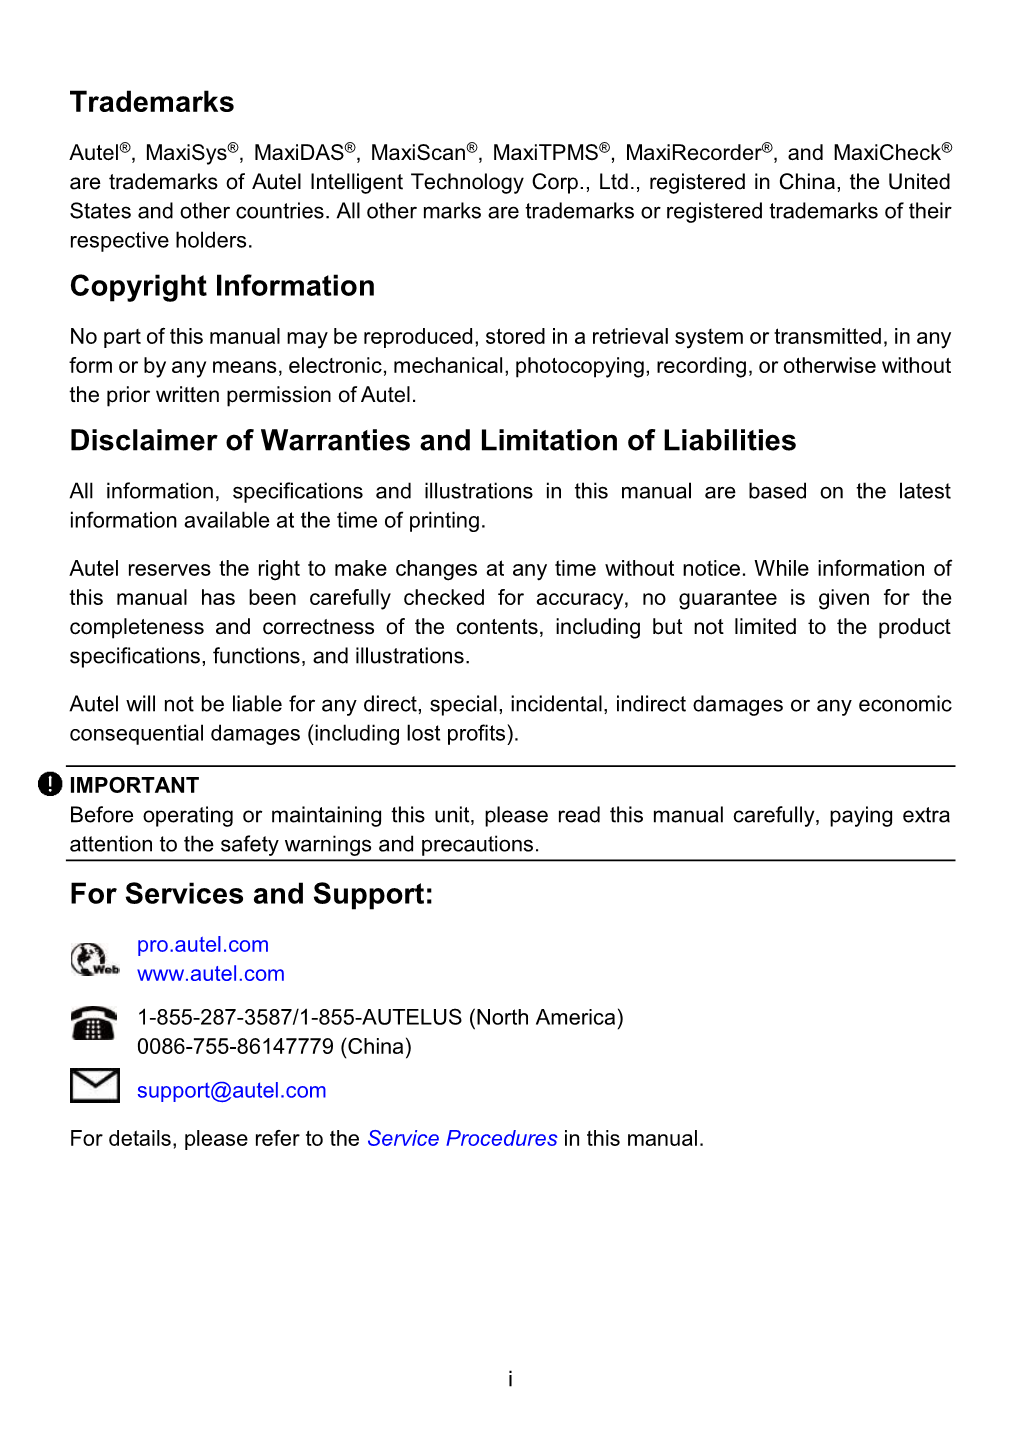 Trademarks Copyright Information Disclaimer of Warranties